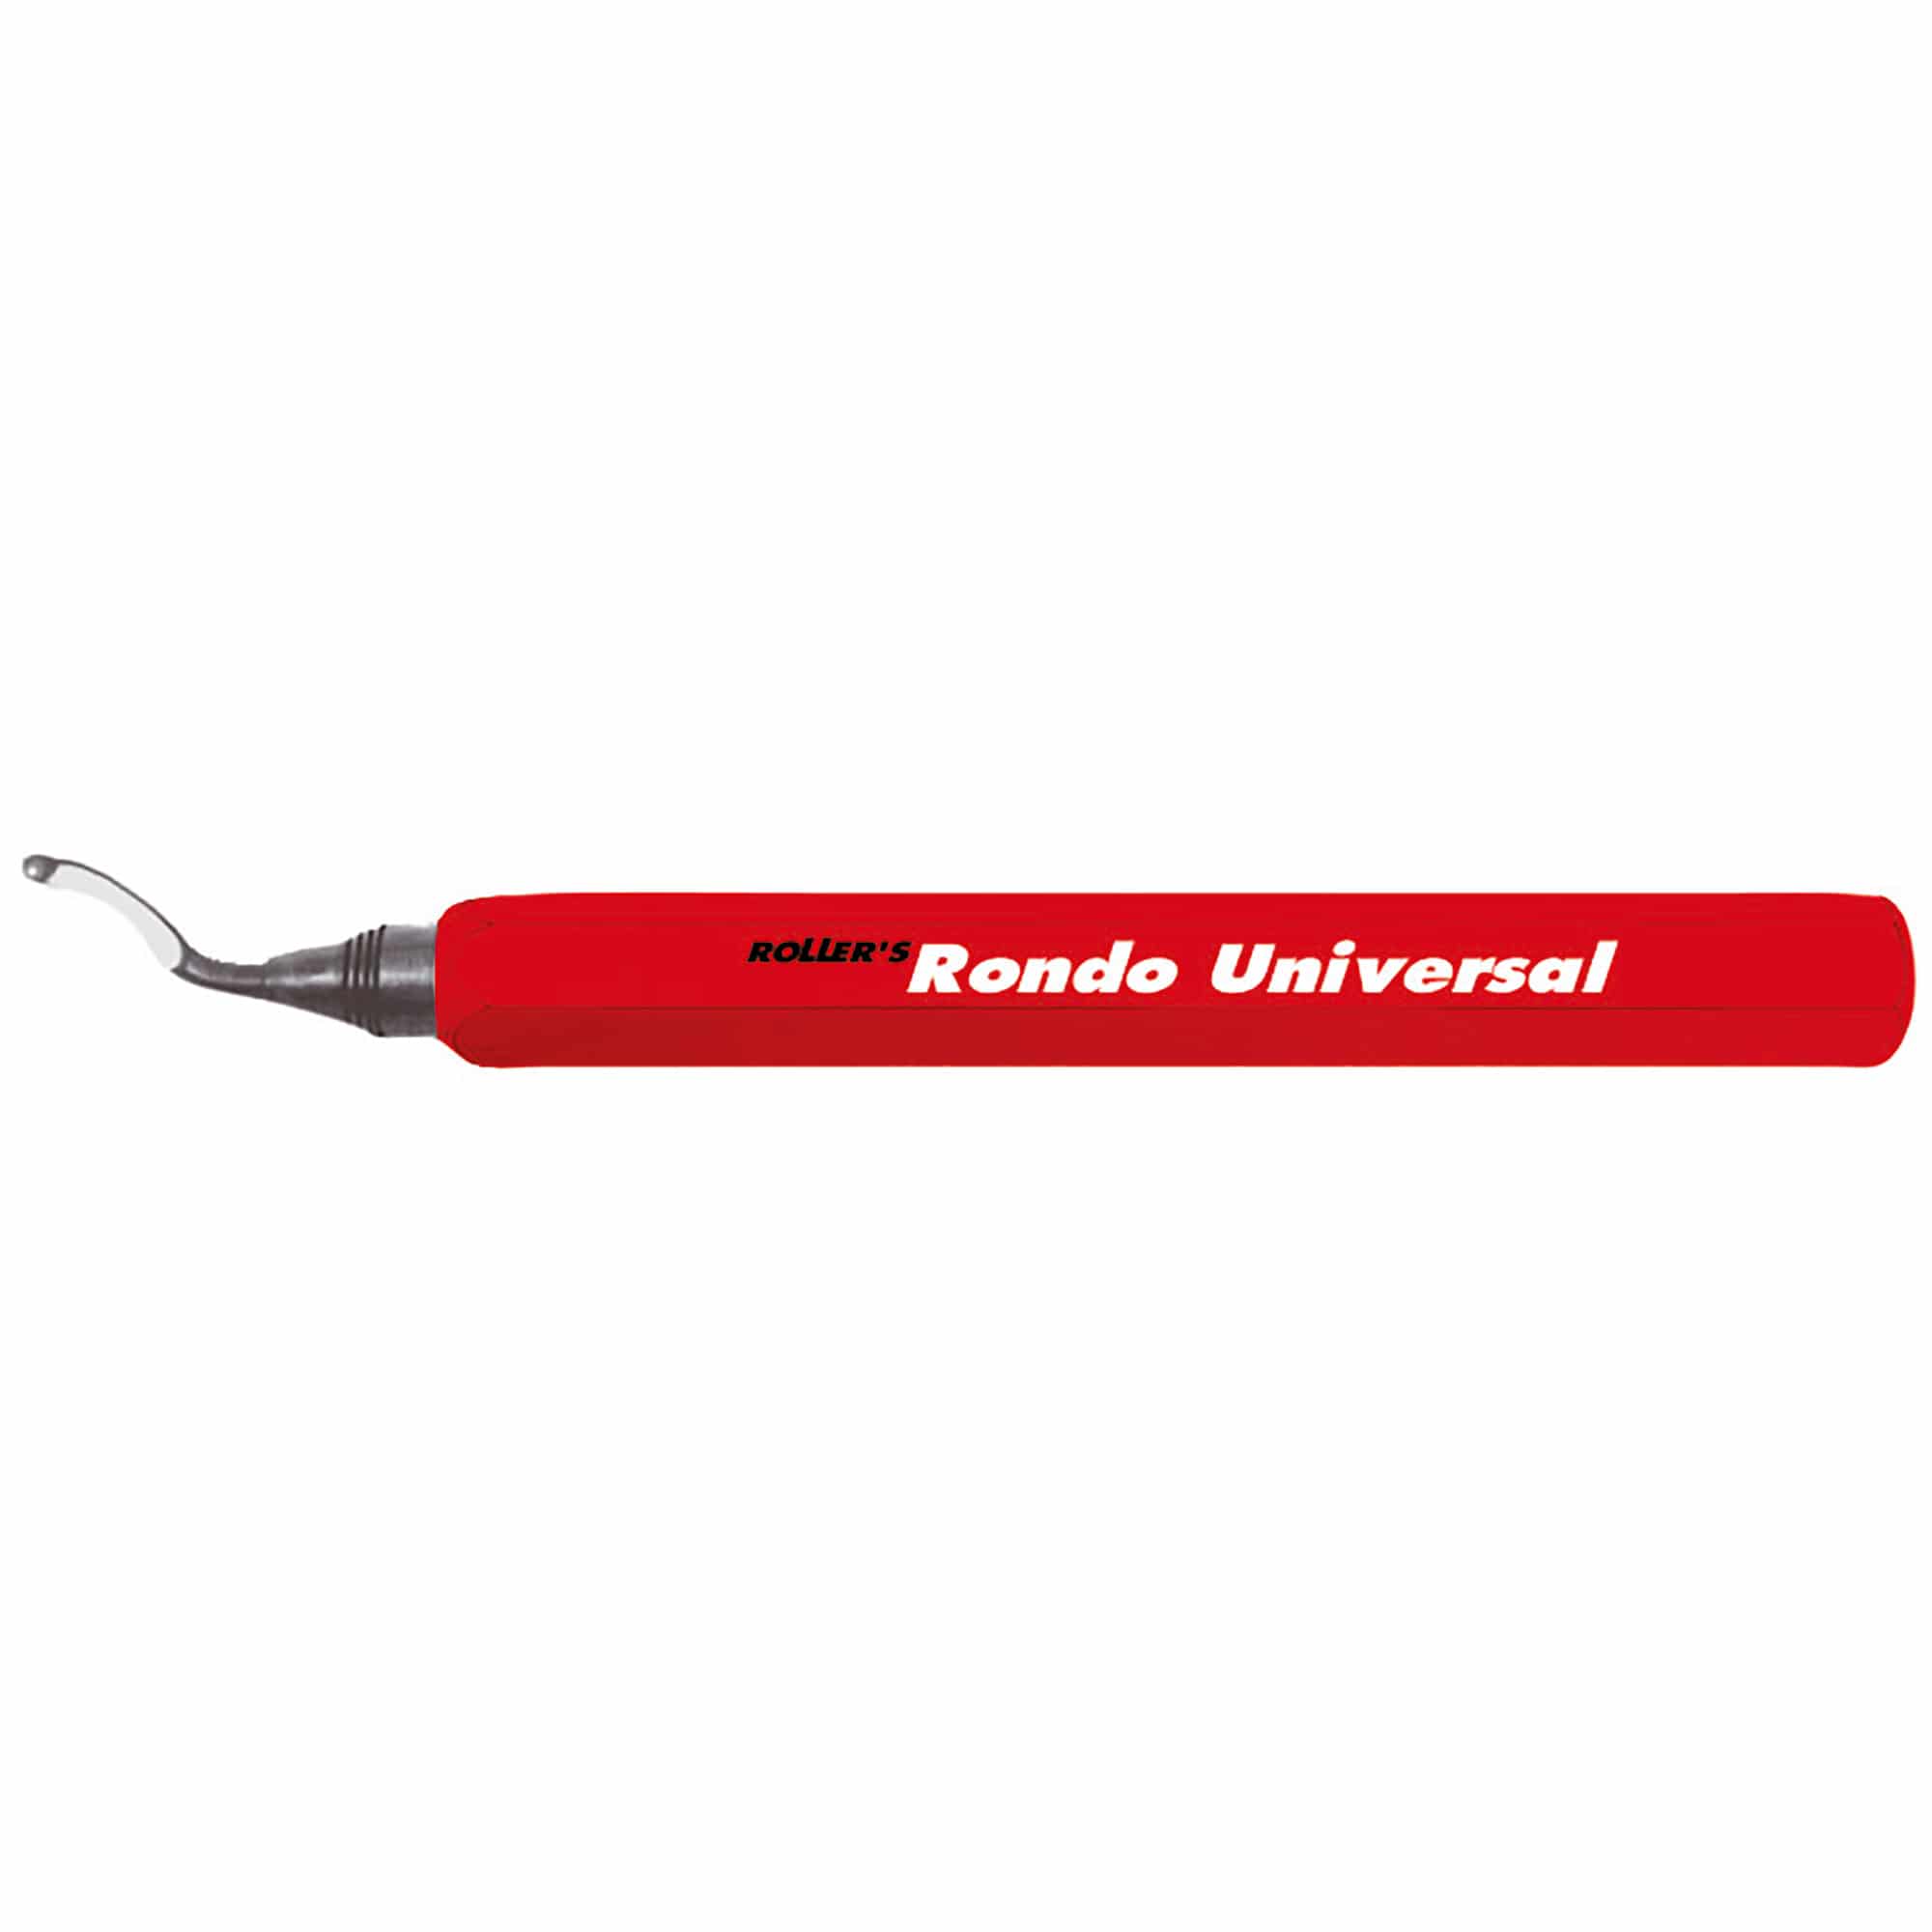 Universal-Entgrater - ROLLER'S Rondo Universal